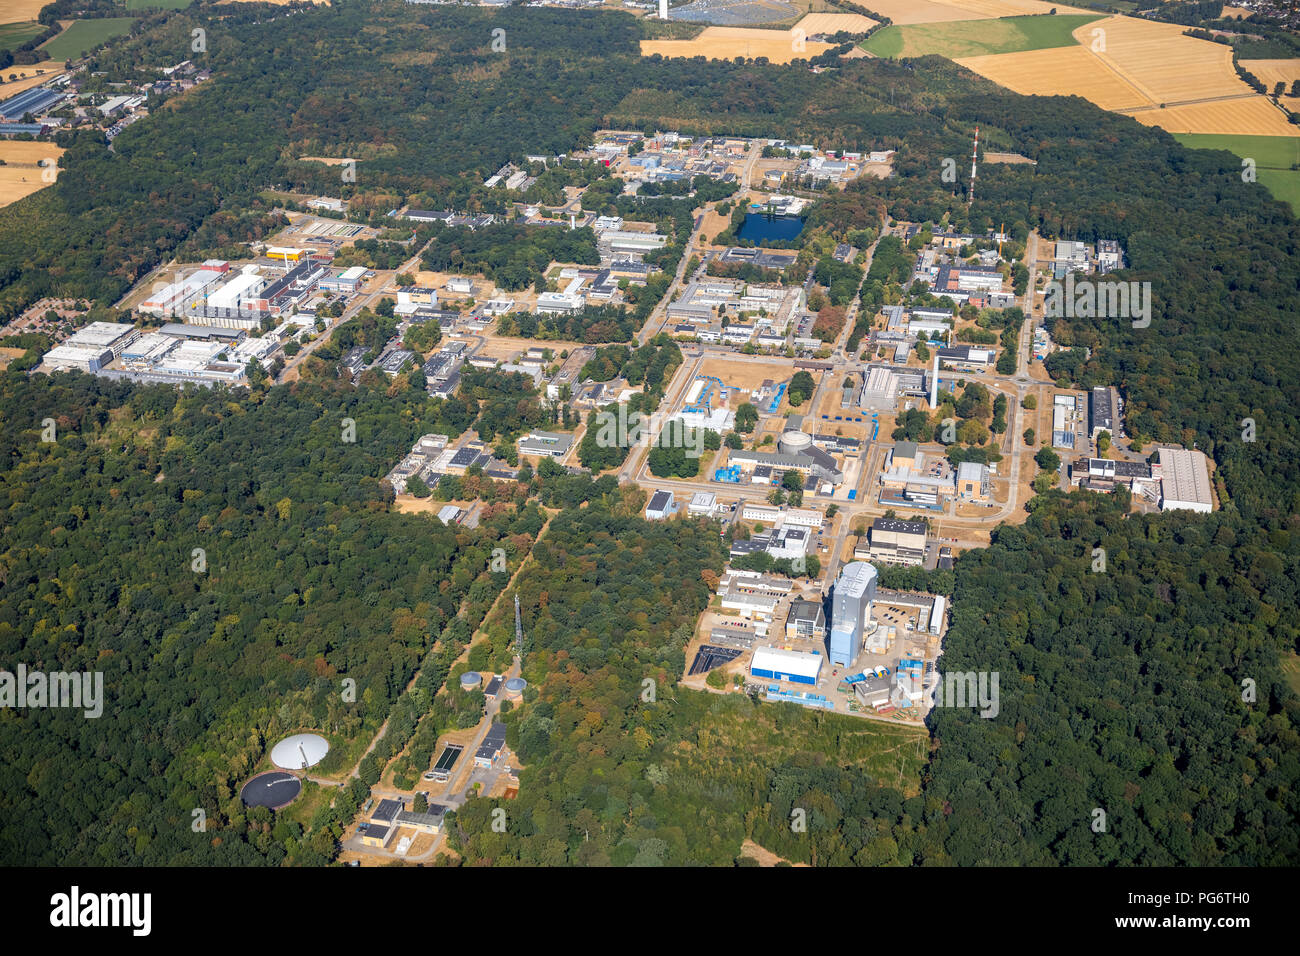 Zona comercial Technology Centre Jülich GmbH, la planta experimental de energía nuclear, Hambach, Jülich, Rheinland, Nordrhein-Westfalen, DEU, Europa Foto de stock